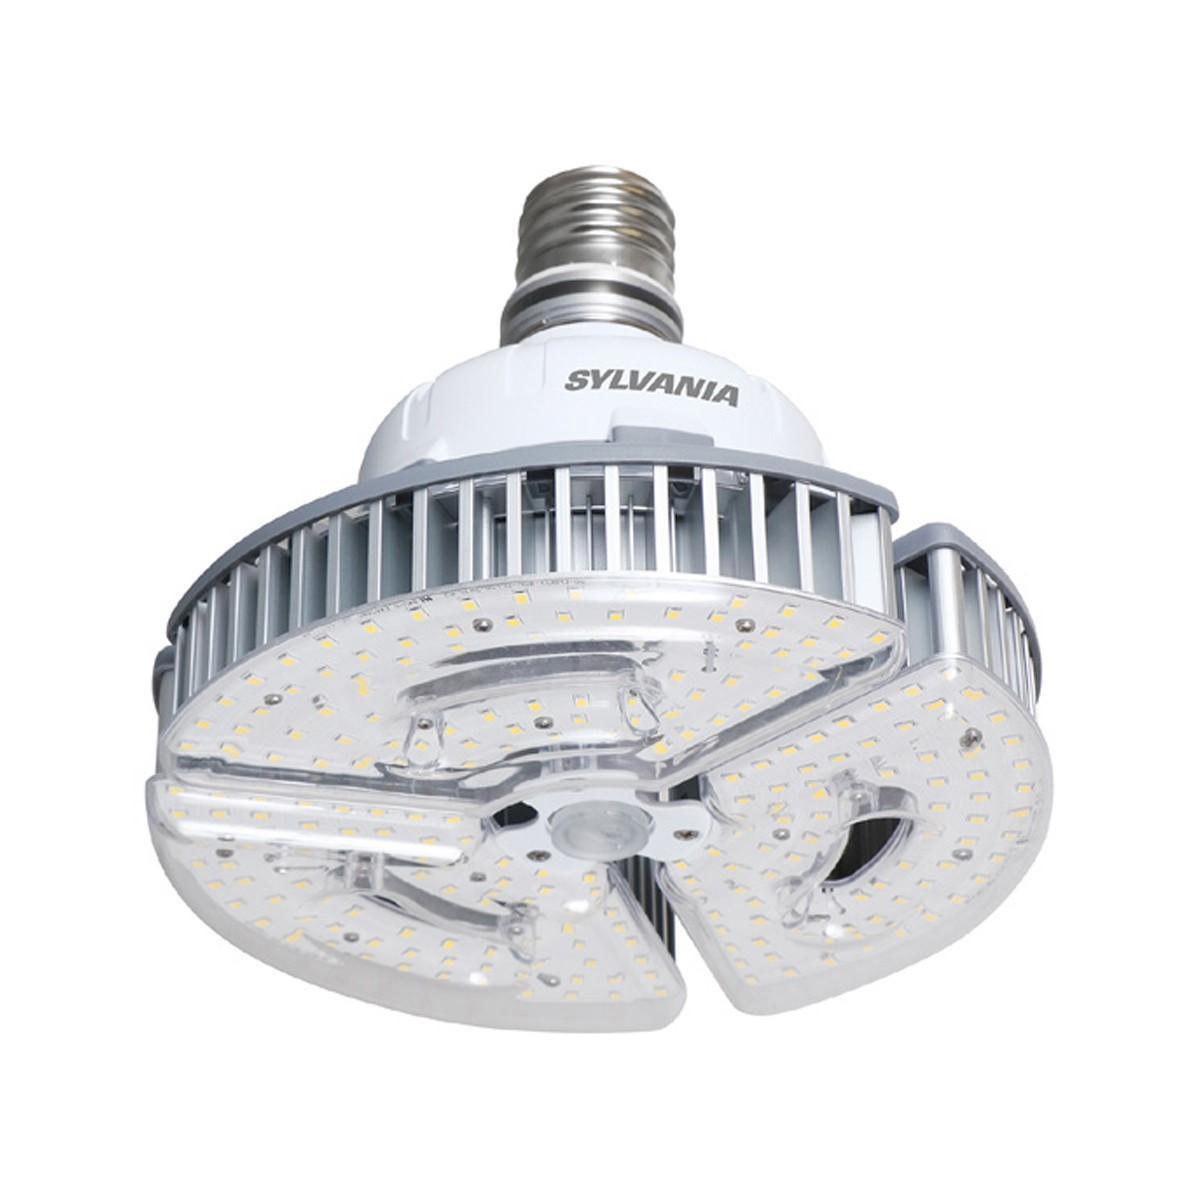 LED High Bay Retrofit Lamp, 60W, 8400 Lumens, 4000K, EX39 Mogul Extended Mogul Base, 120-277V - Bees Lighting